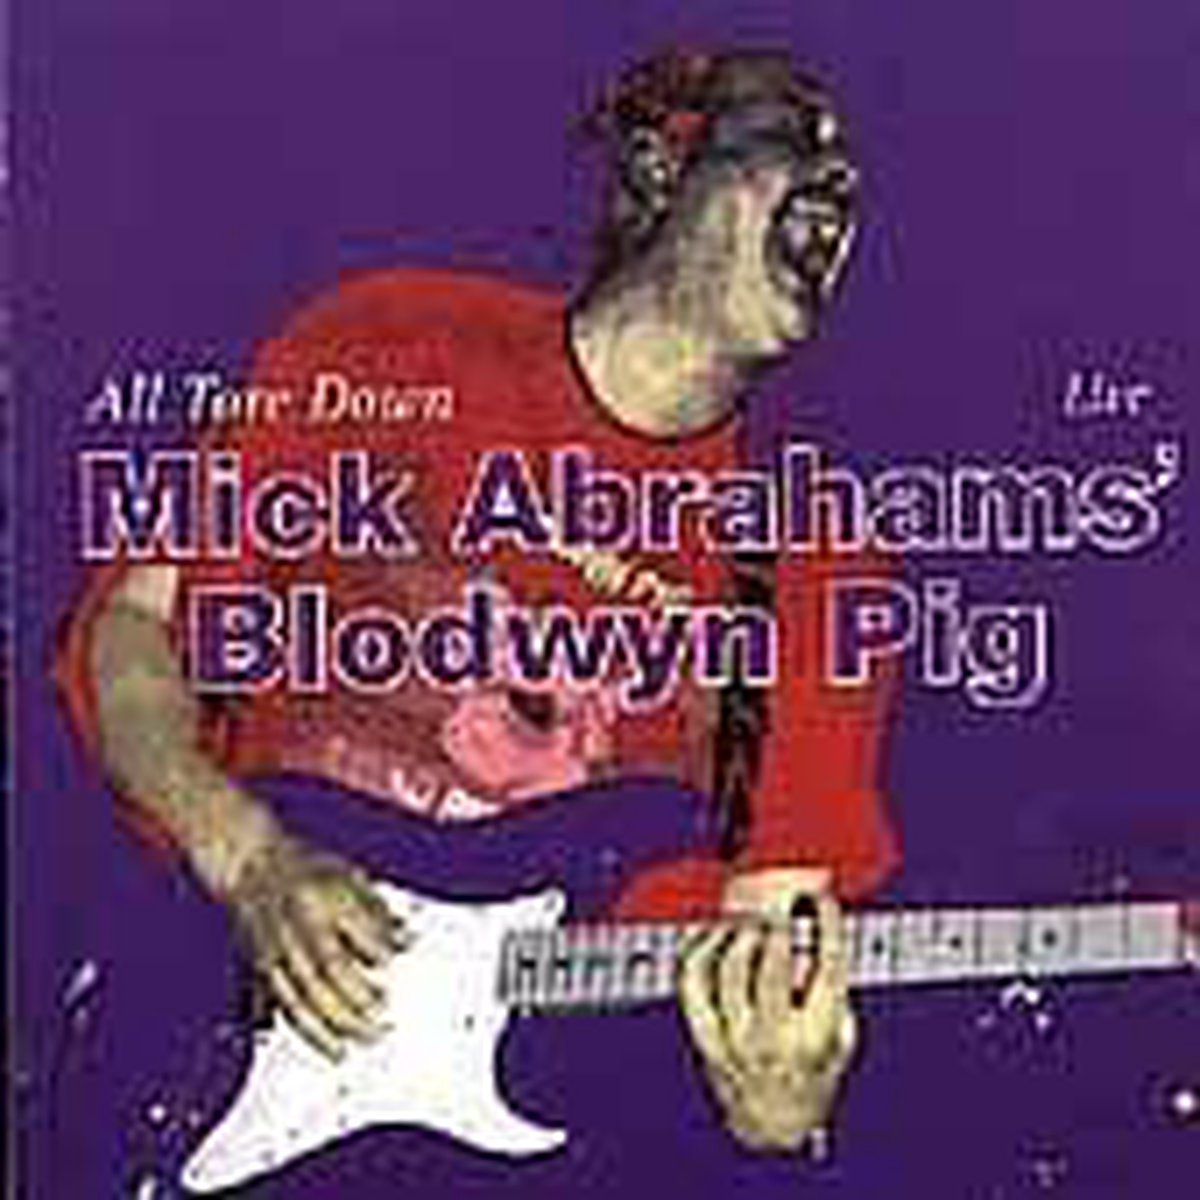 Live: All Tore Down - Mick Abrahams' Blodwyn Pig